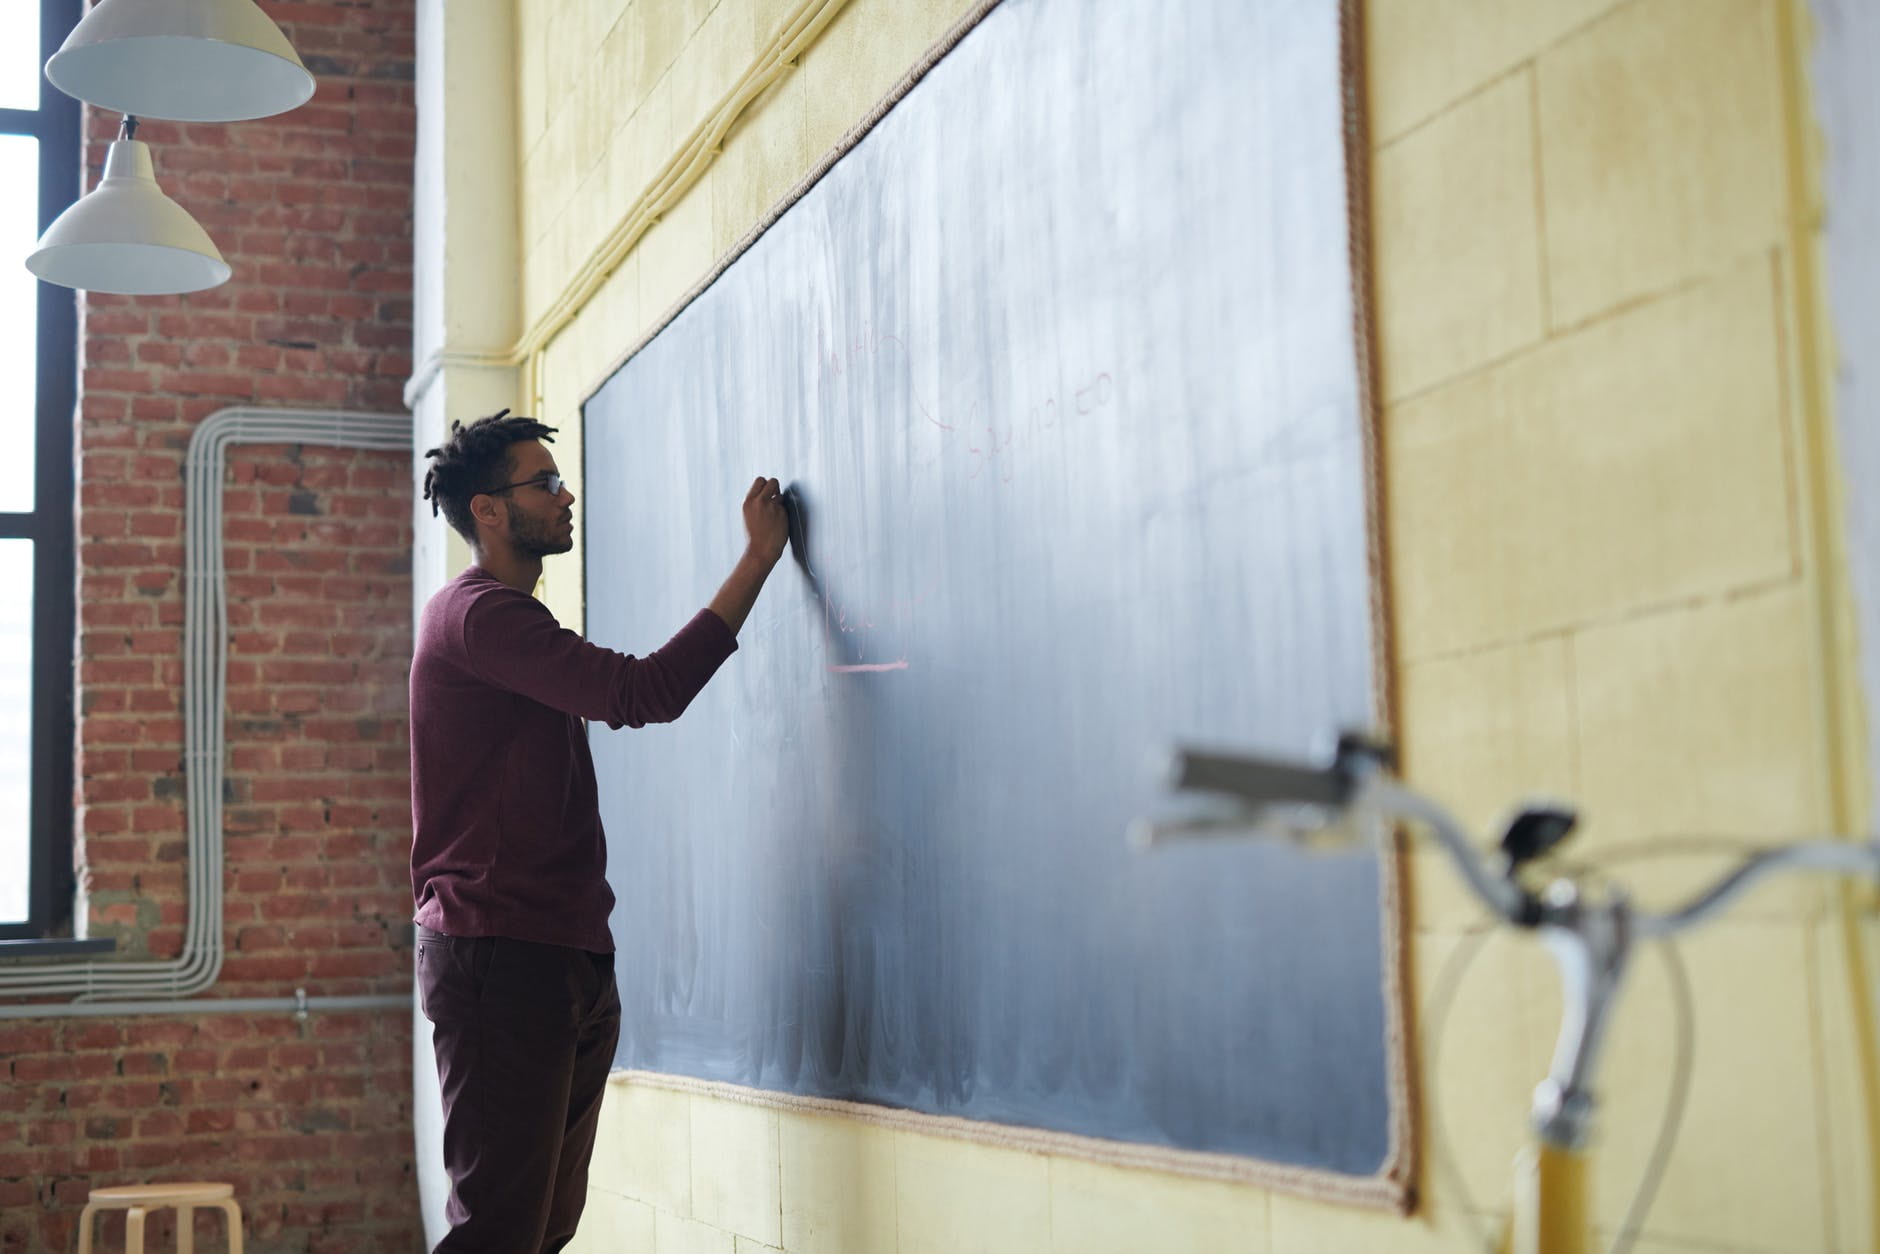 Teacher in modern style classroom writing on a chalkboard